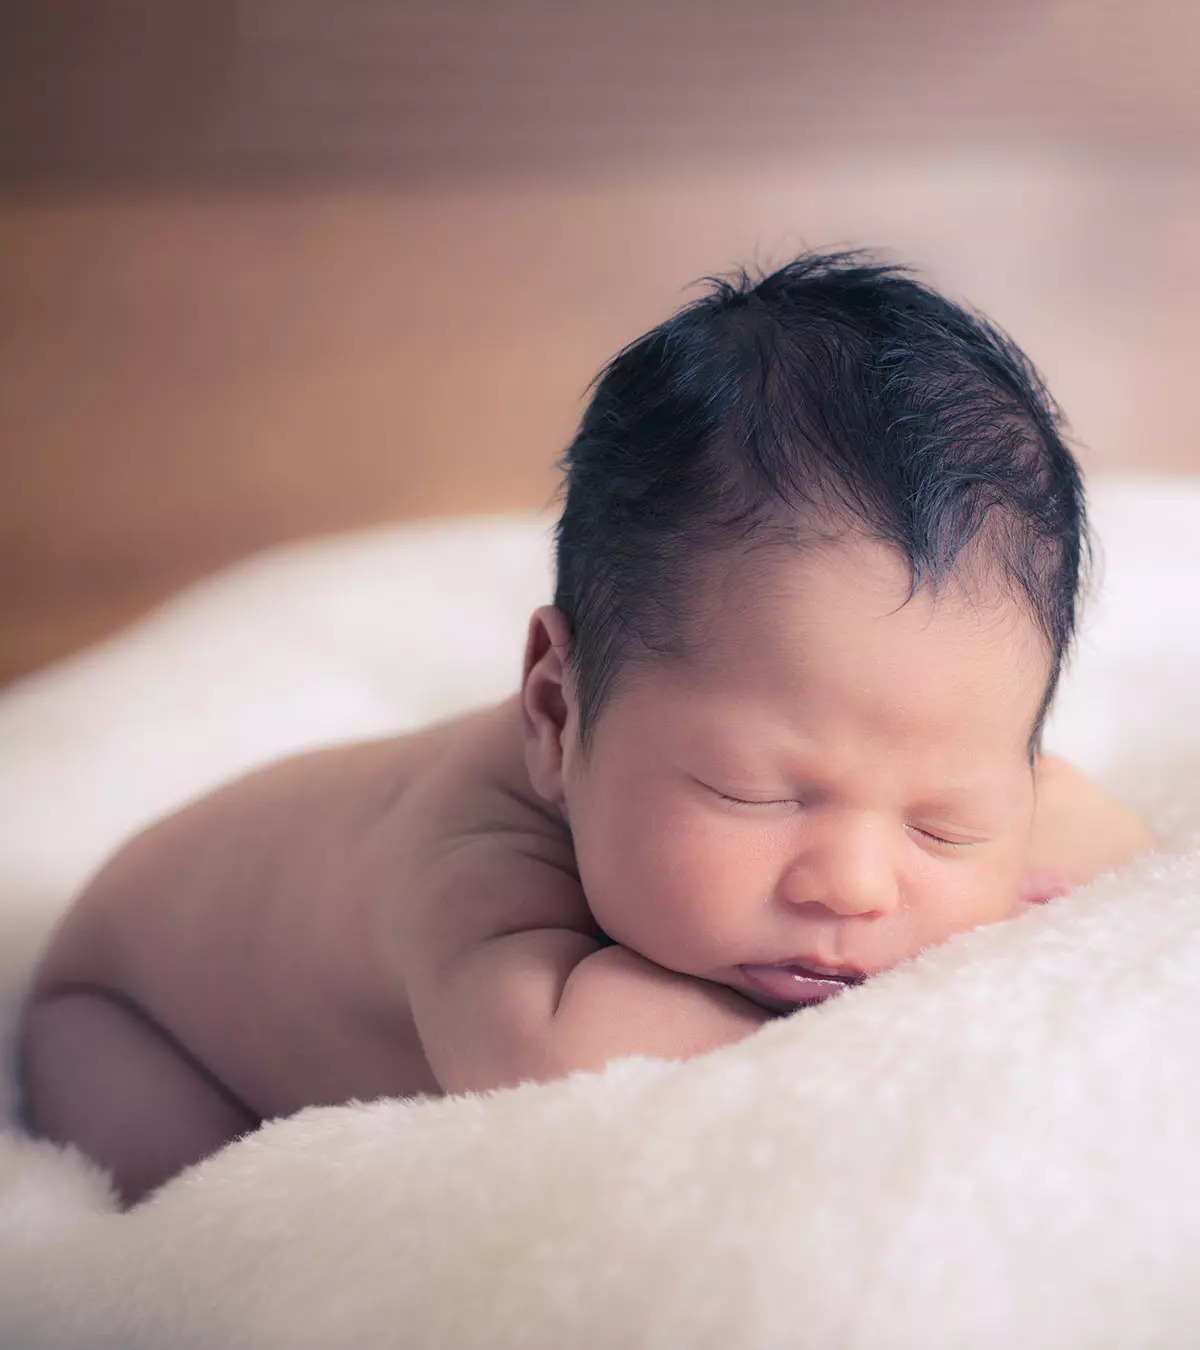 0 Remarkable Sanskrit Baby Names For Girls And Boys